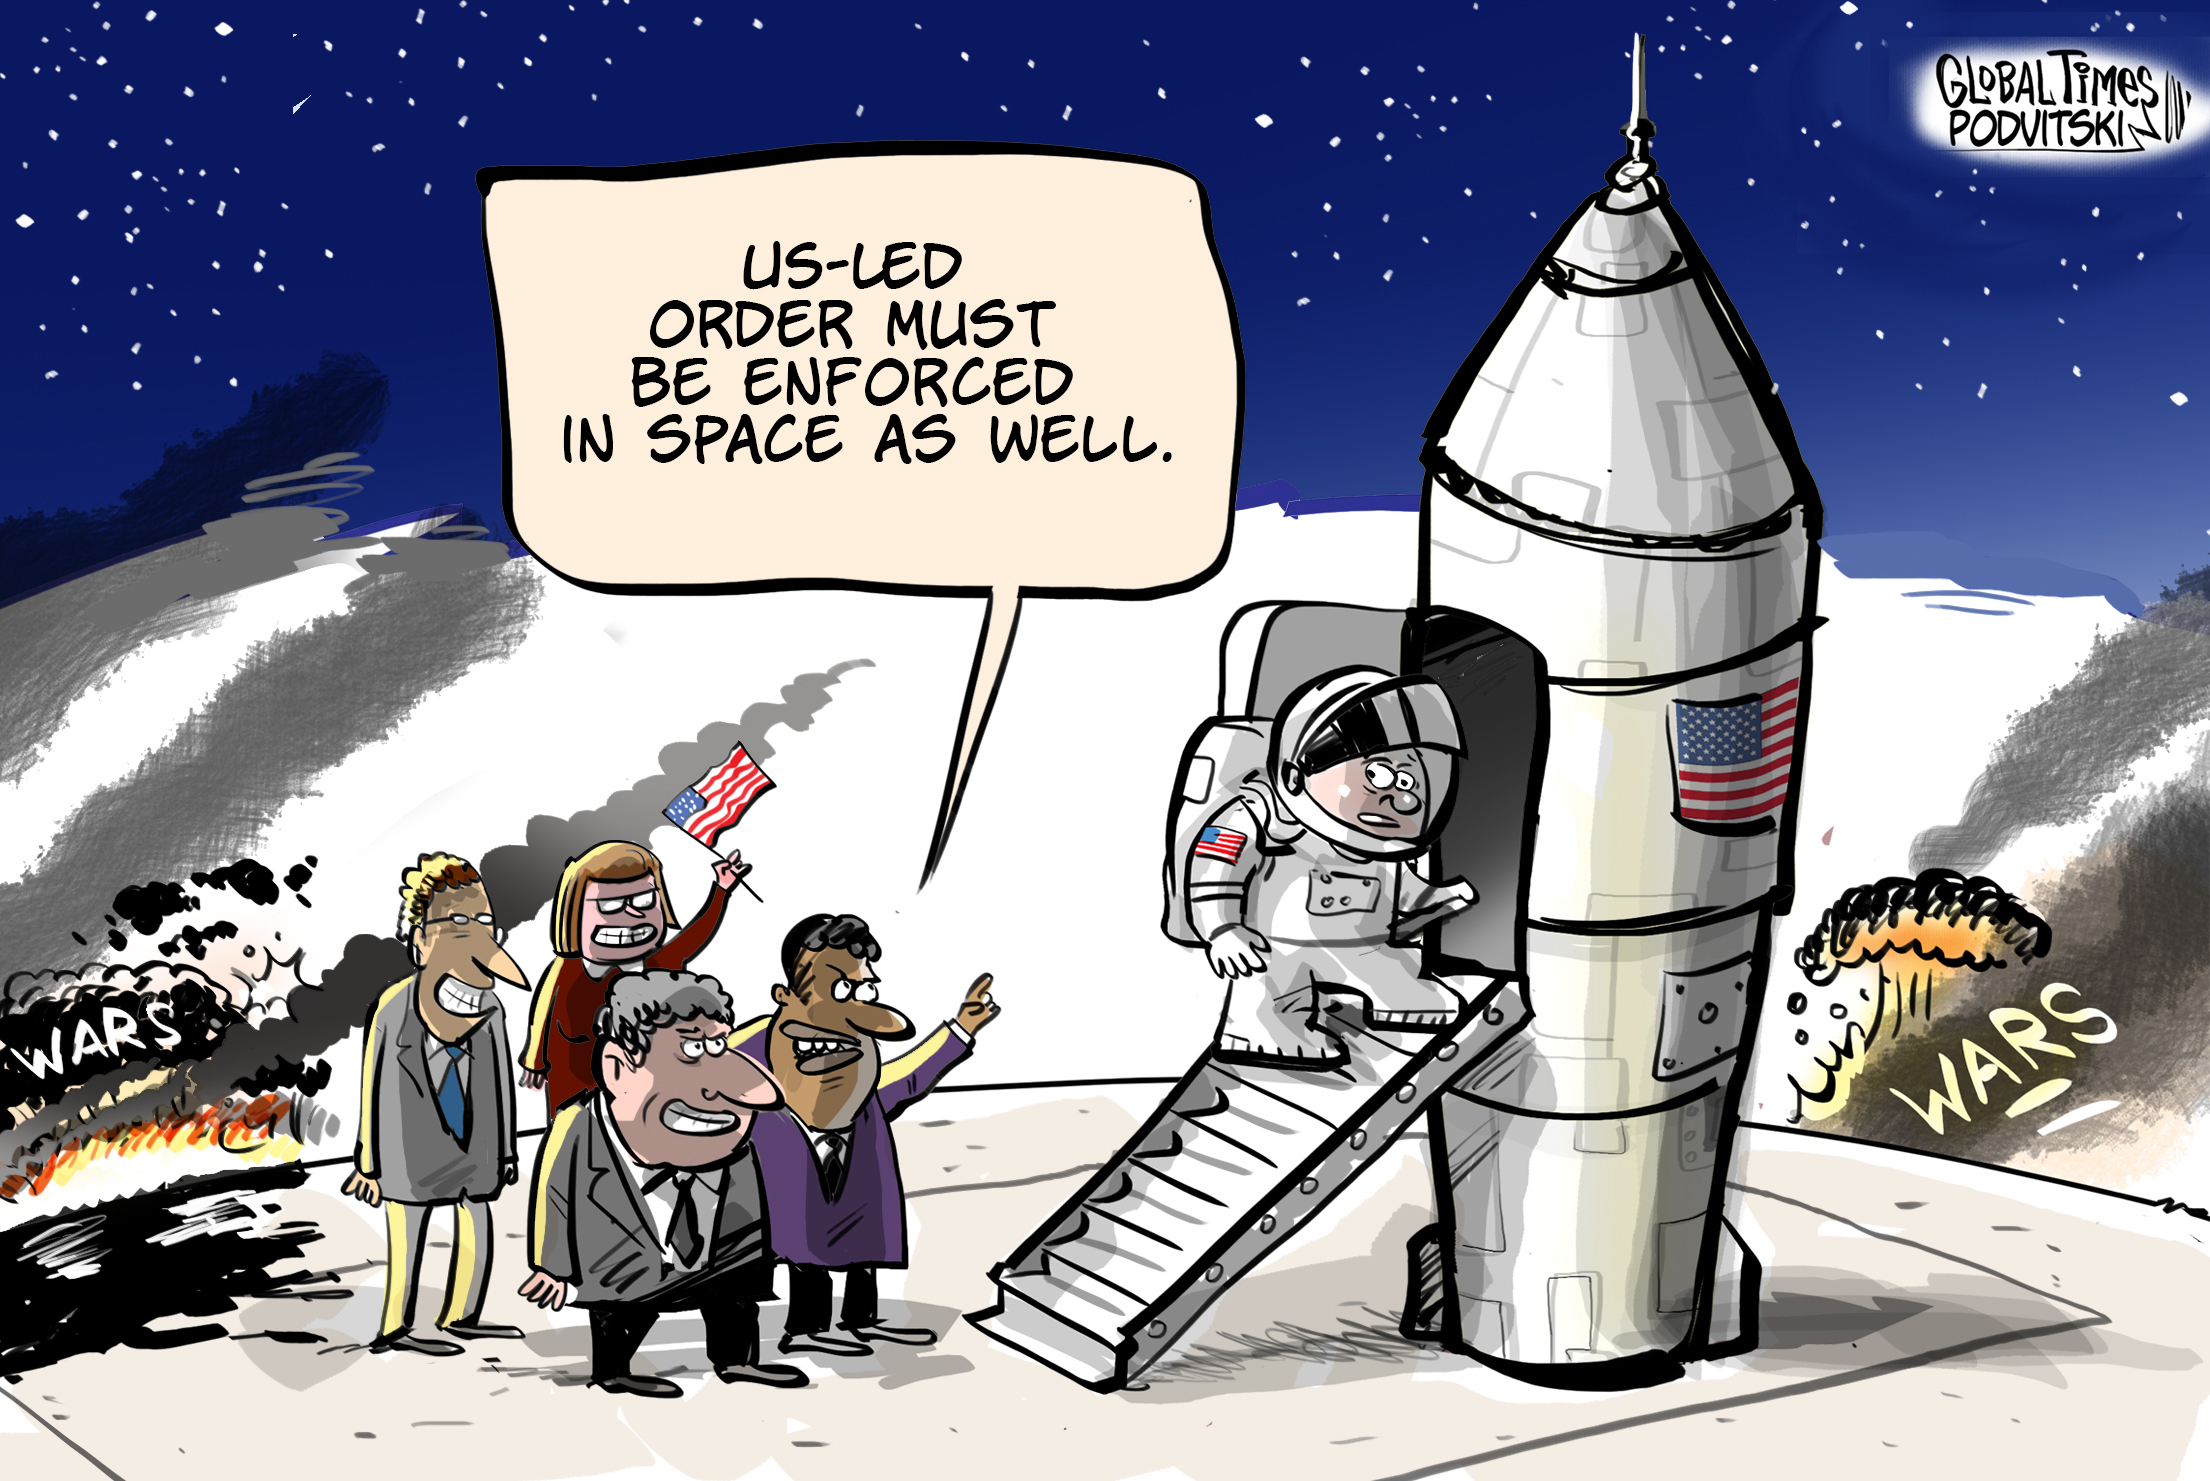 The US seeks to extend its hegemony into space. Cartoon: Vitaly Podvitski